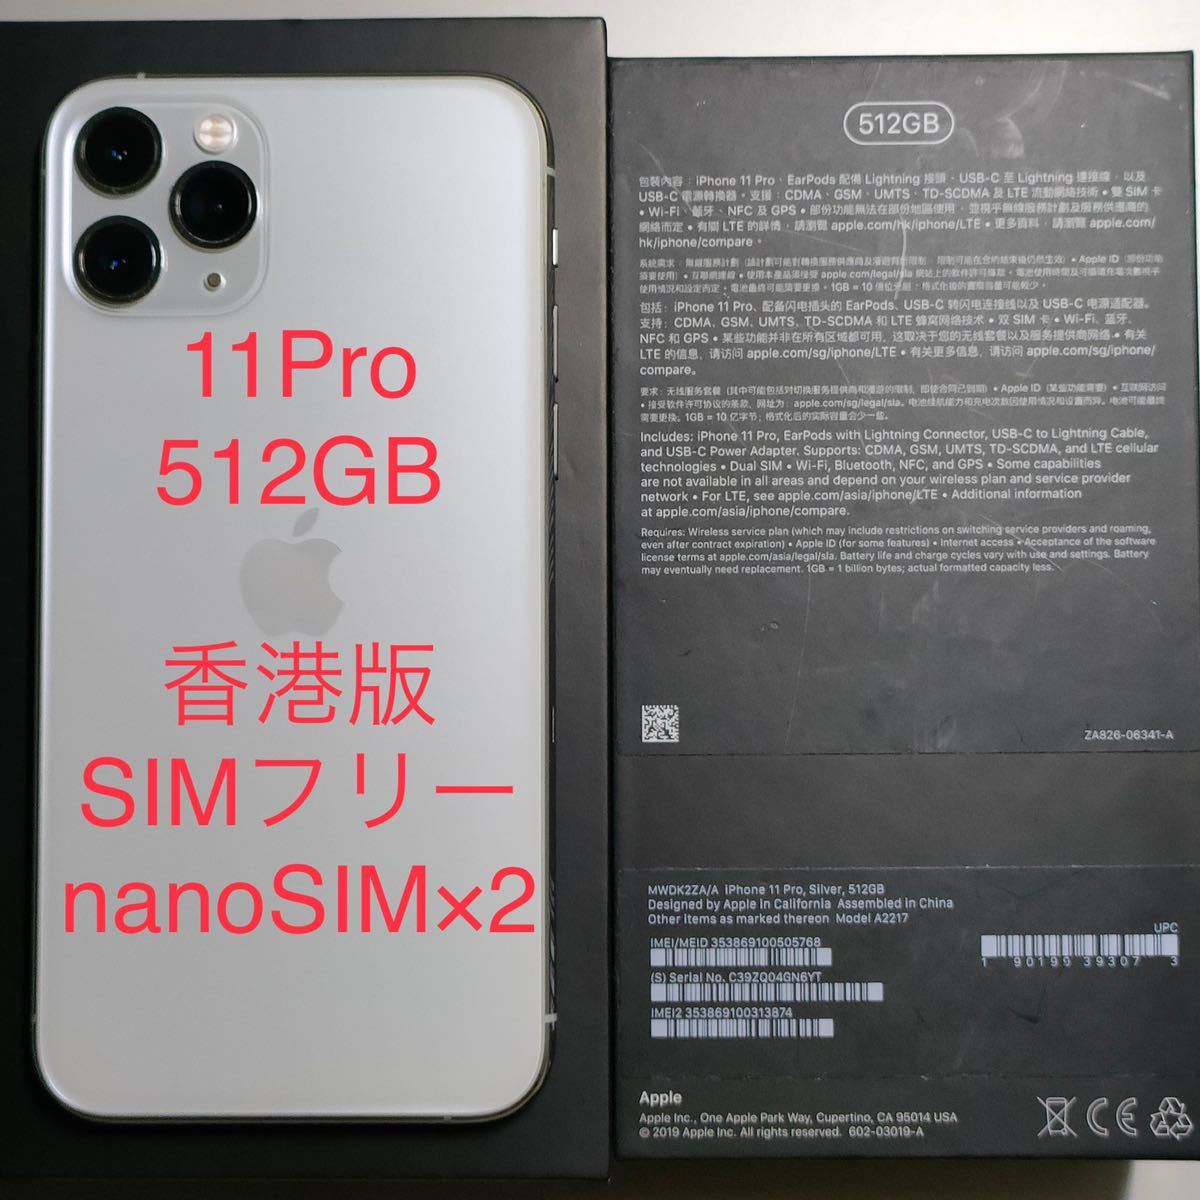 iphone11 pro 512GB USAバージョン シャッター音なし - rehda.com